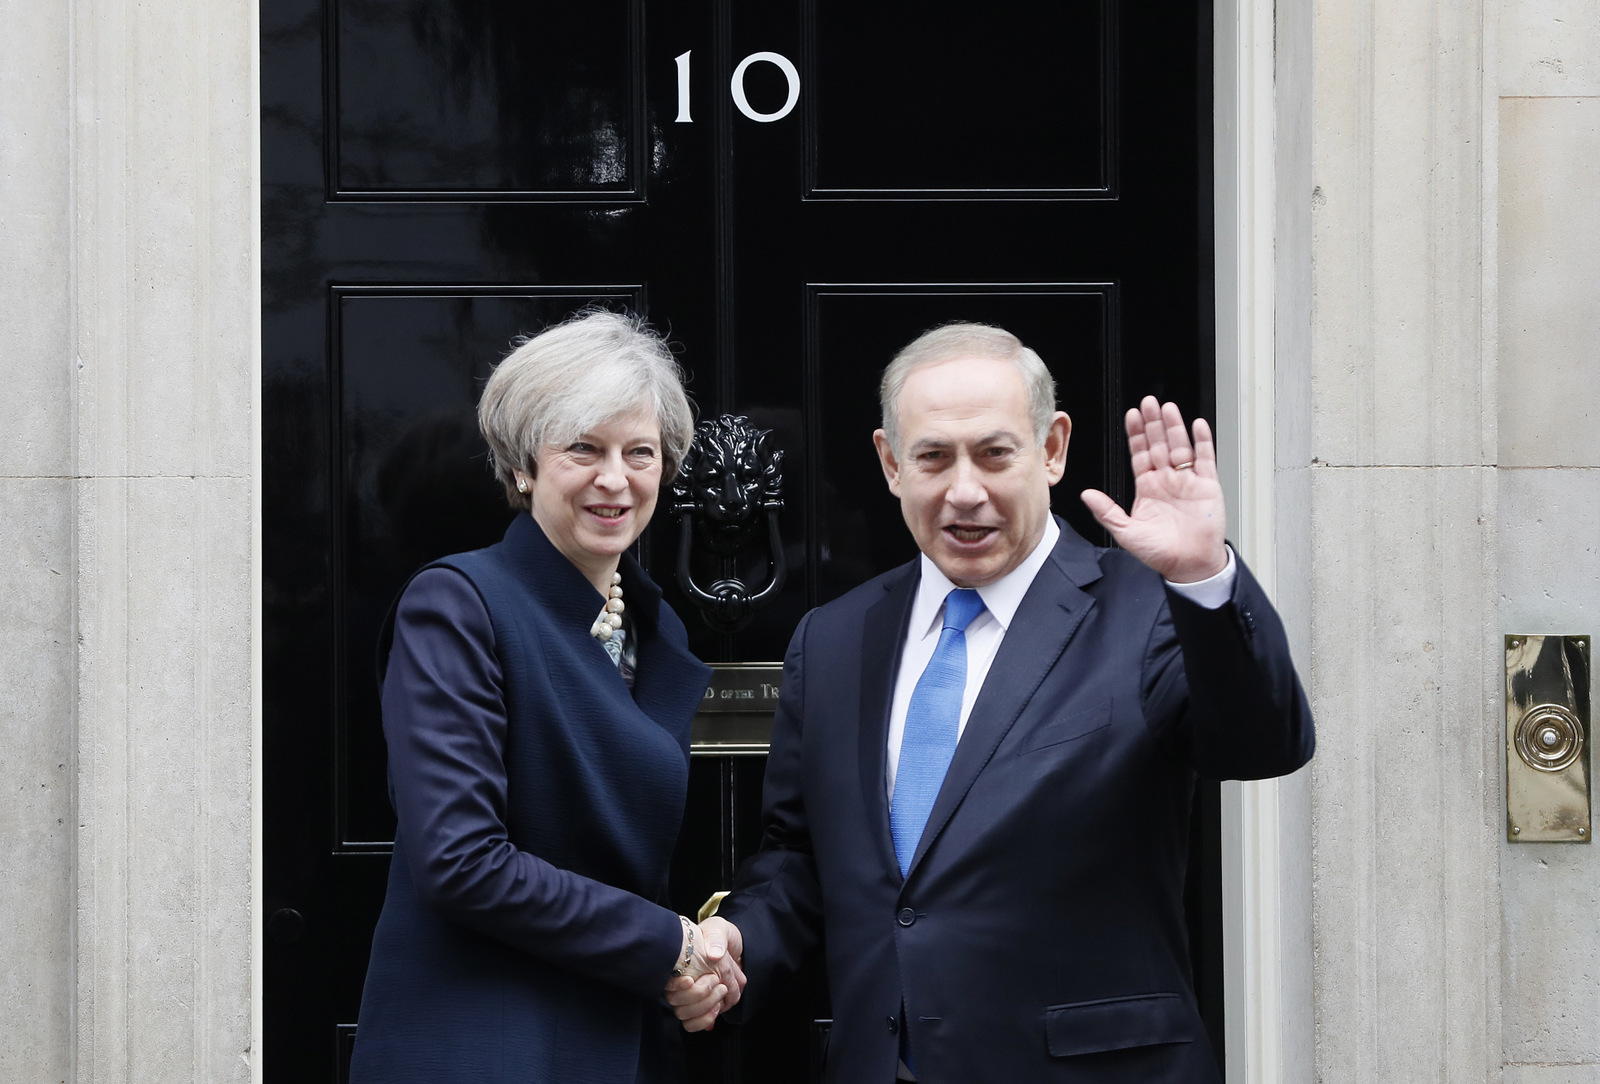 Britain's Prime Minister Theresa May greets Prime Minister Benjamin Netanyahu of Israel at Downing Street in London, Monday, Feb. 6, 2017. (AP/Kirsty Wigglesworth)